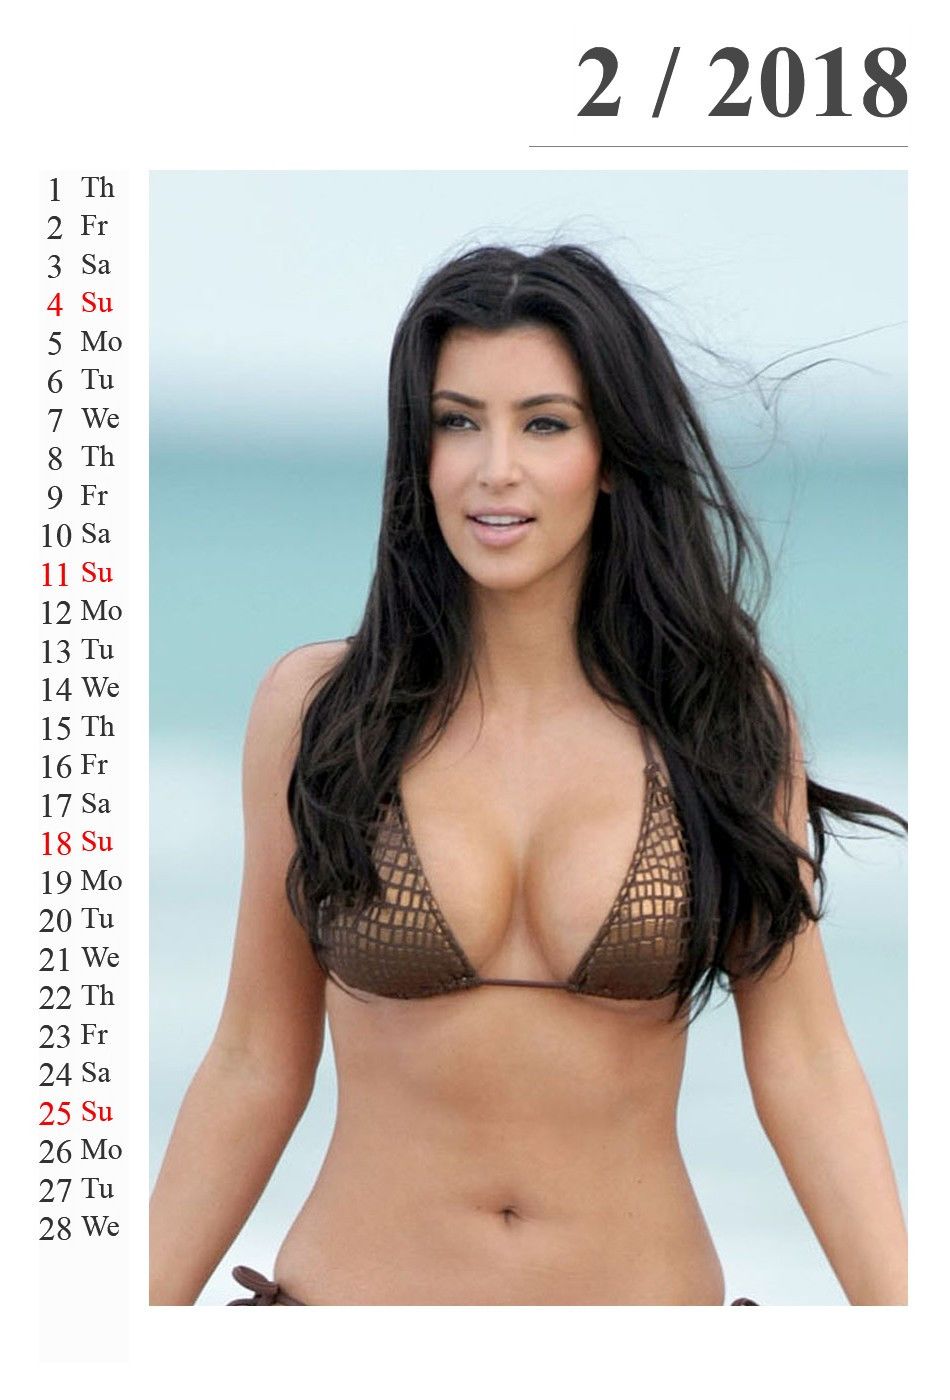 Must Awaited Kim Kardashian Calendar Of 2018 Is Here